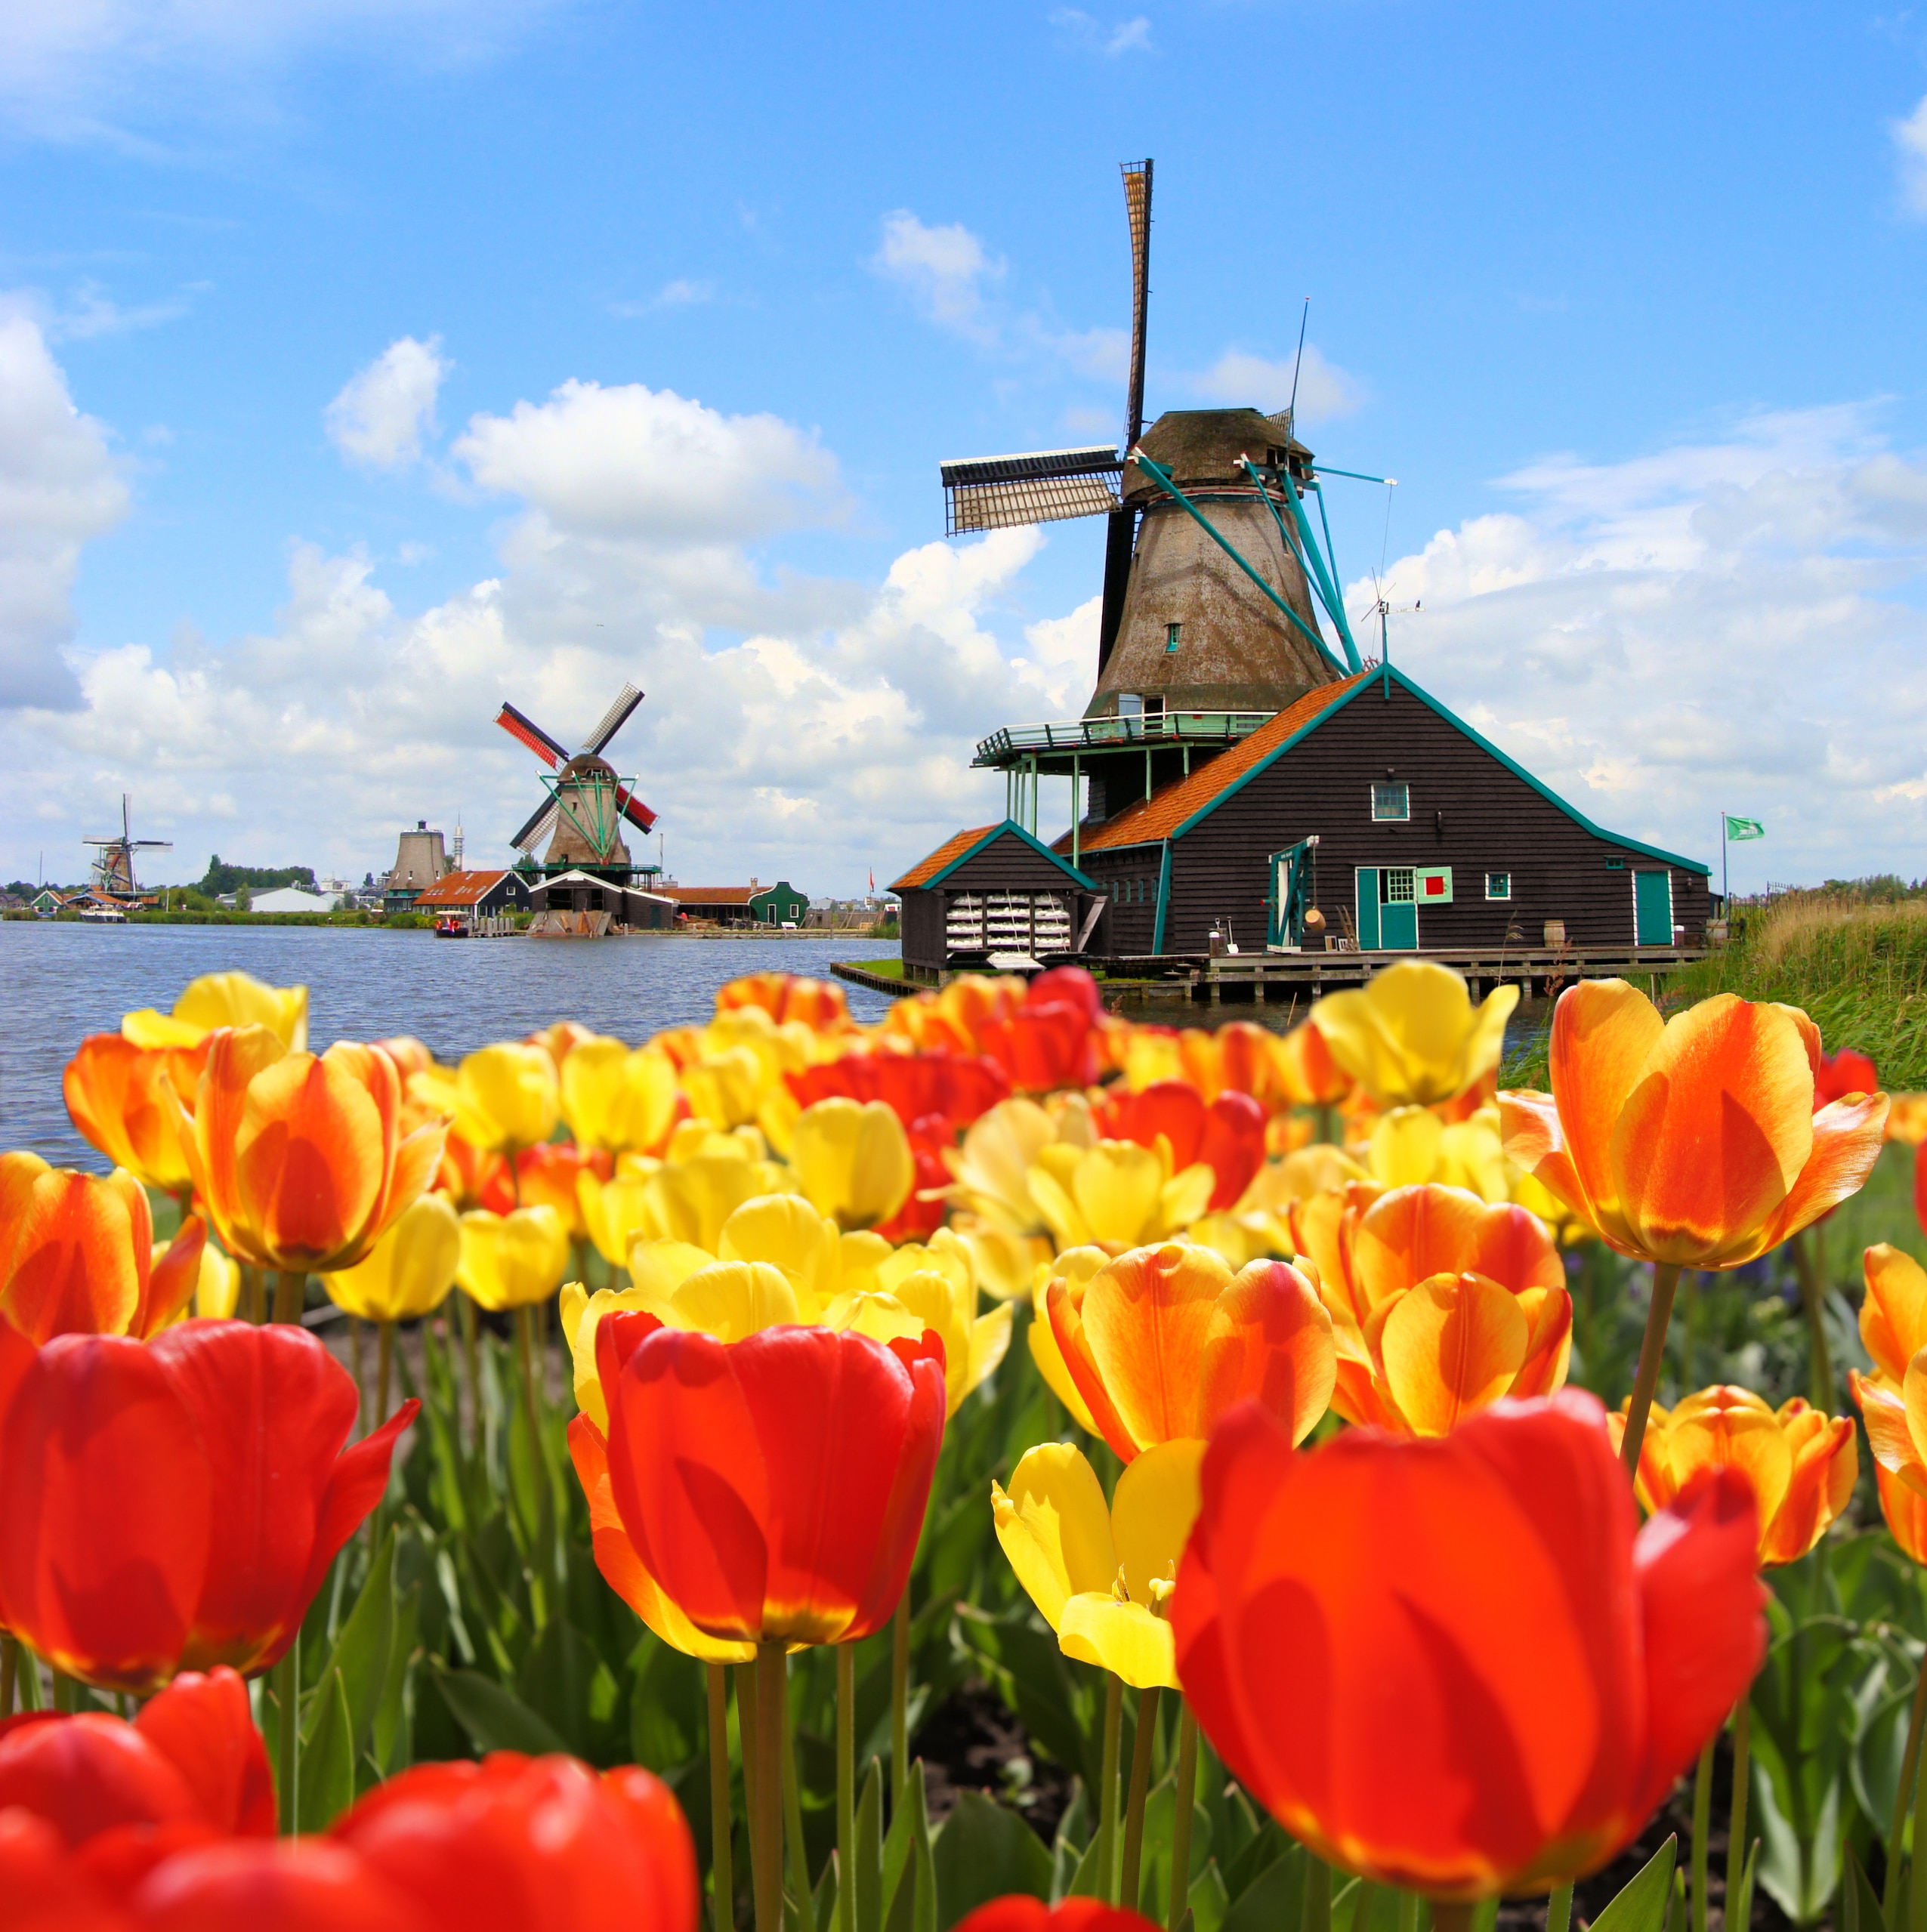 toevoegen Harden Zending 14 Reasons to visit the Netherlands in Spring! - Netherlands Tourism